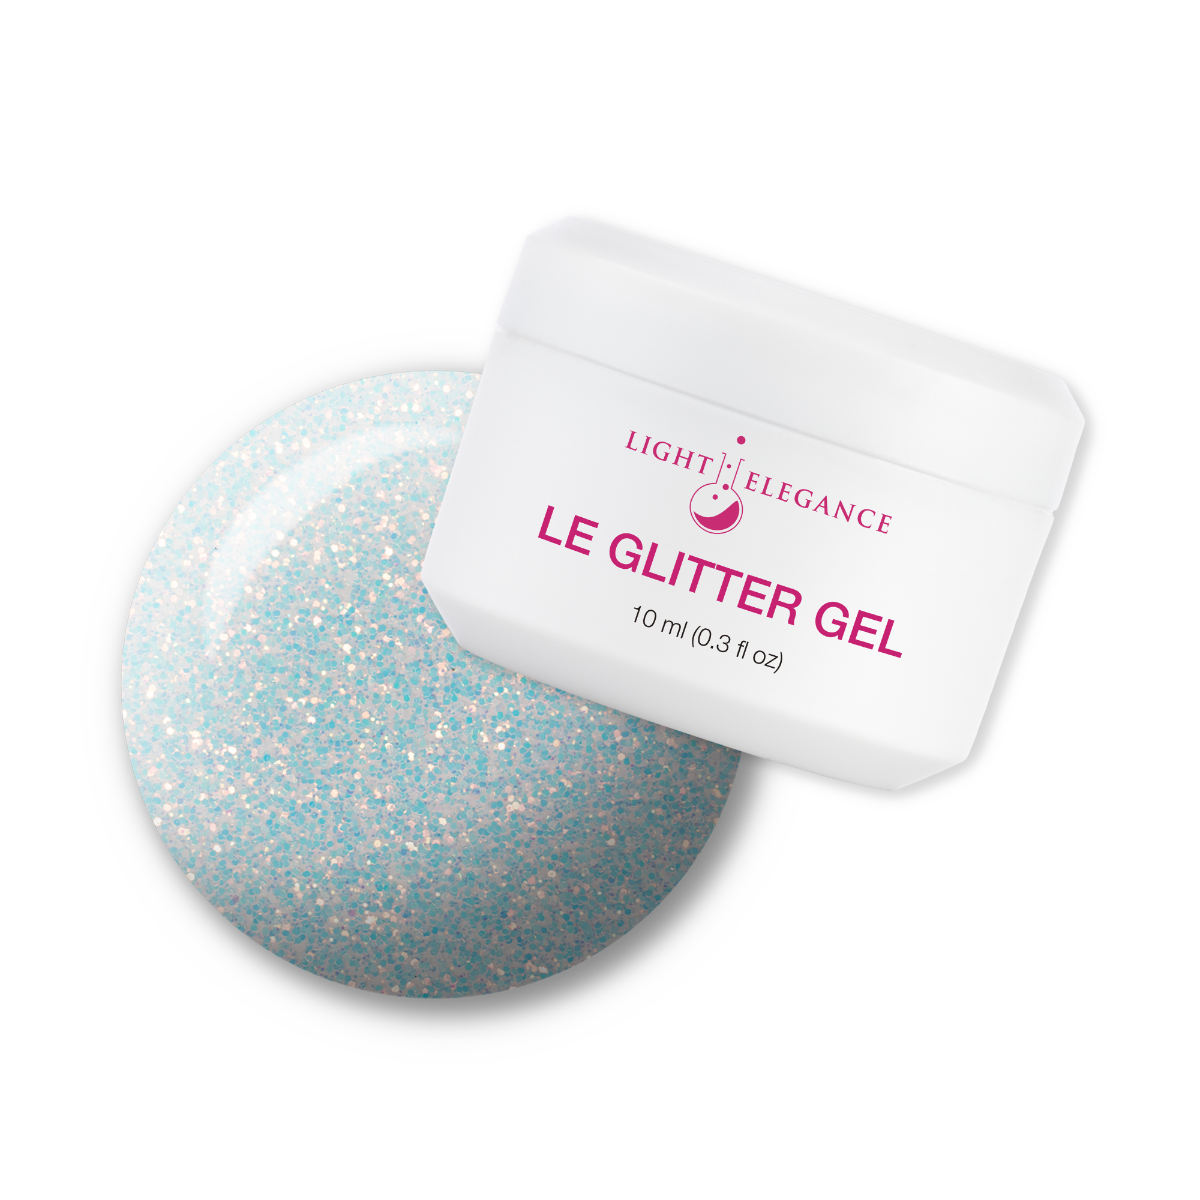 Light Elegance Glitter Gel - Mother of Pearl :: New Packaging